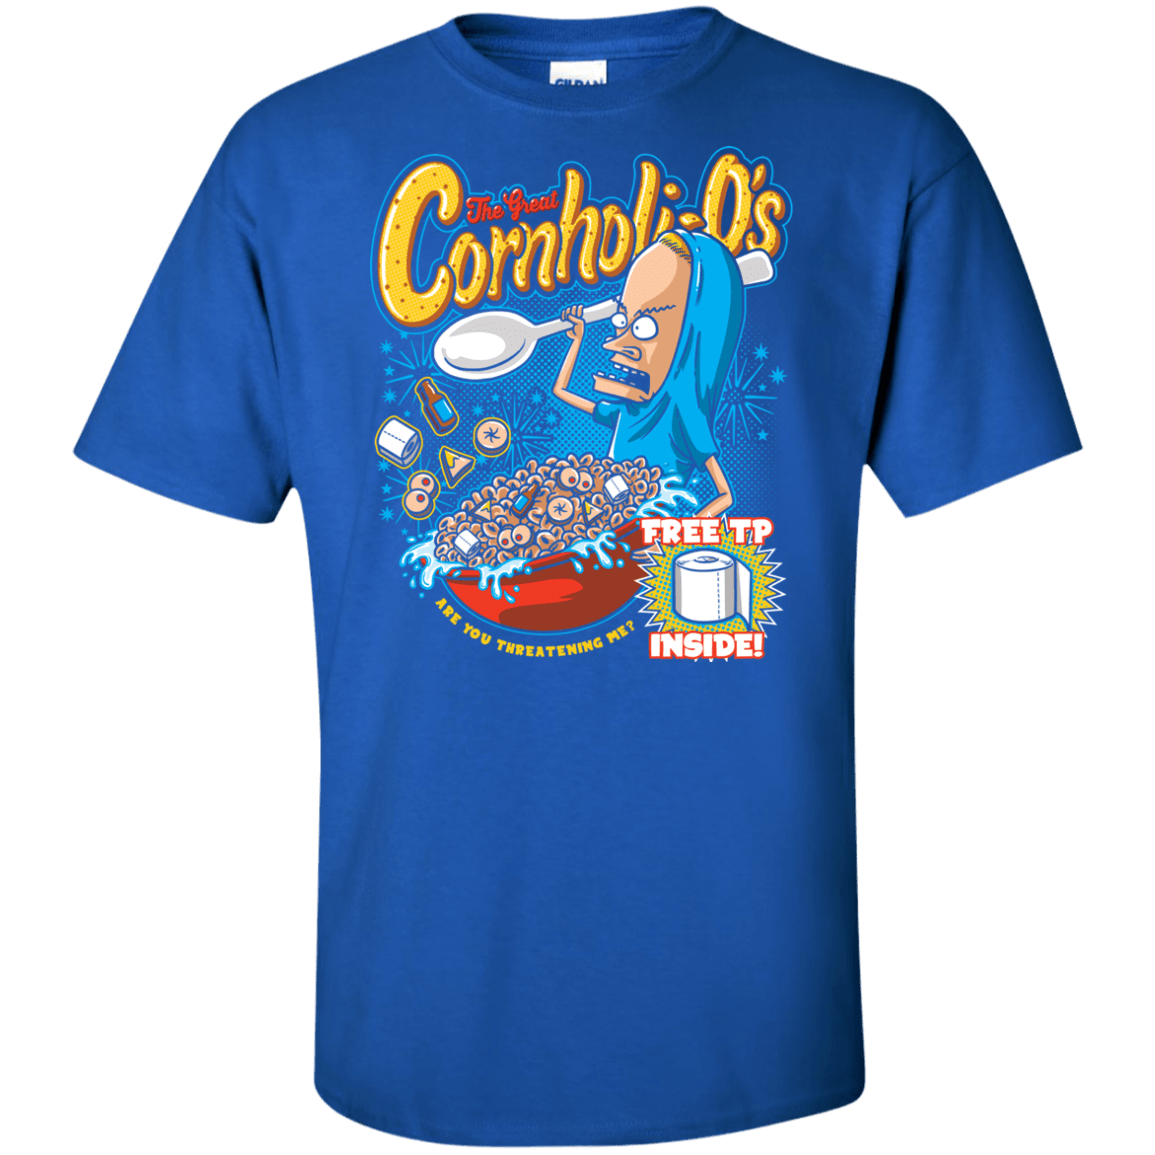 Cornholi-O's Tall T-Shirt